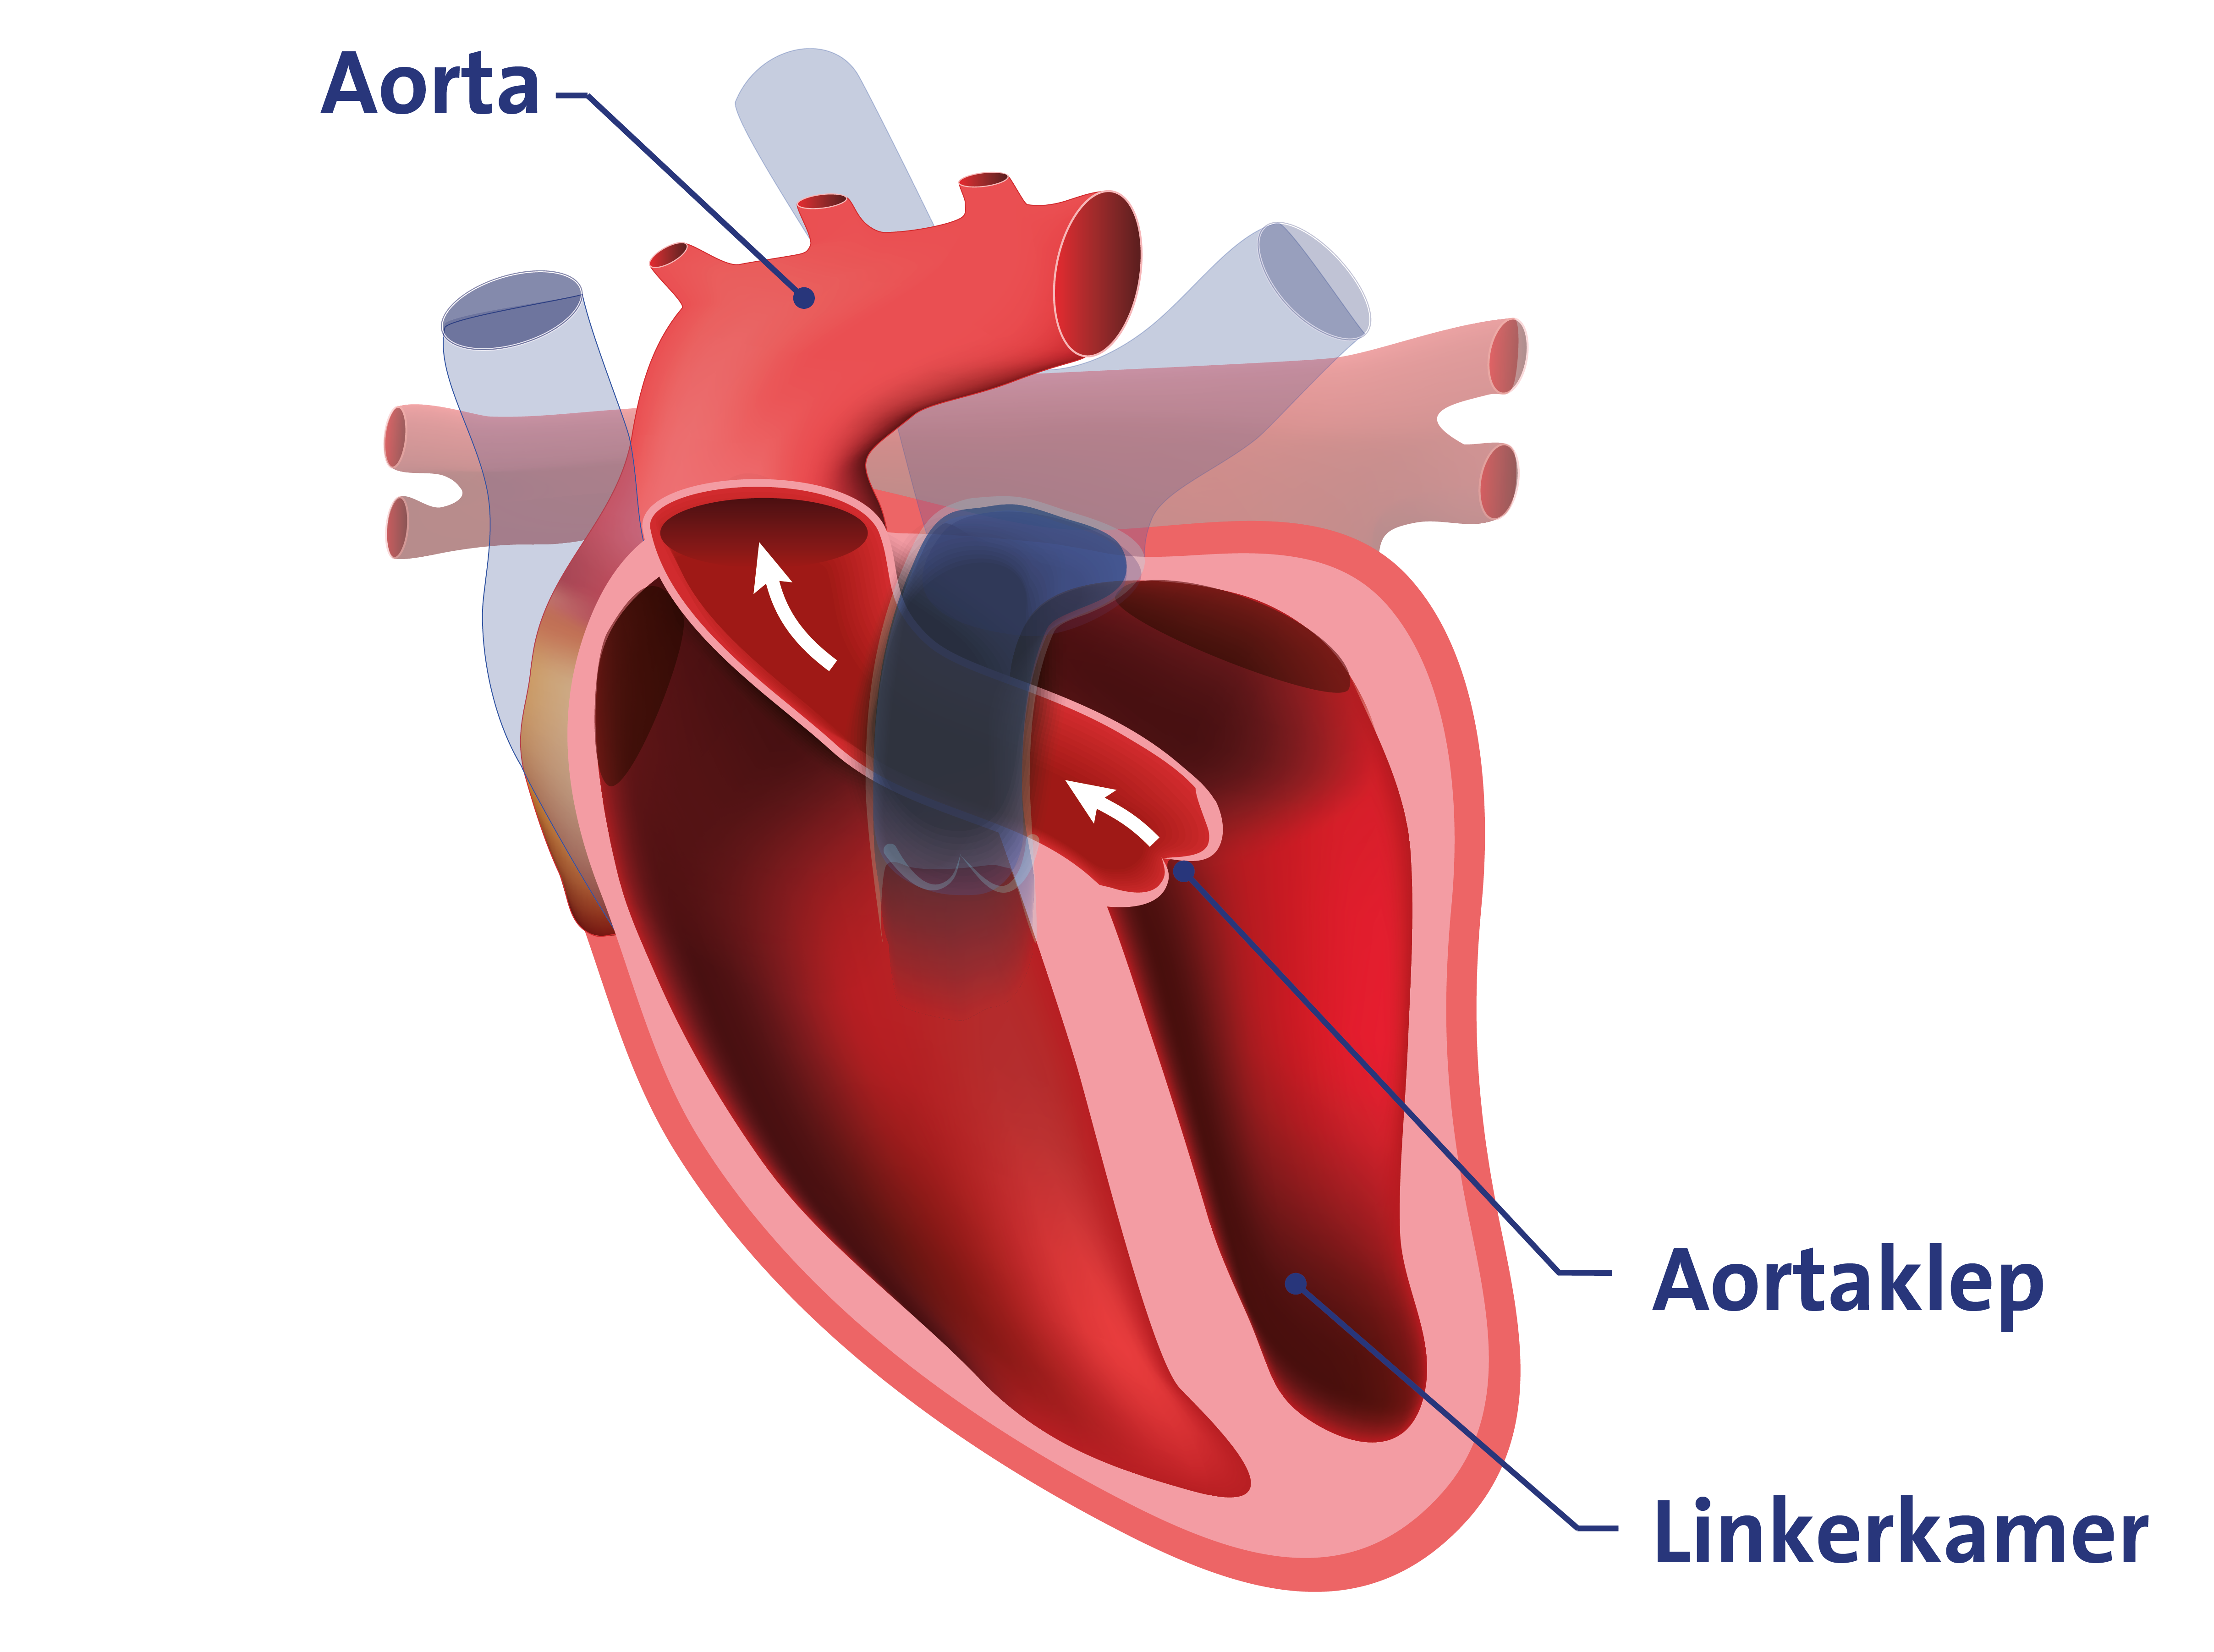 Afbeelding hart, met aorta, aortaklep en linkerkamer aangegeven